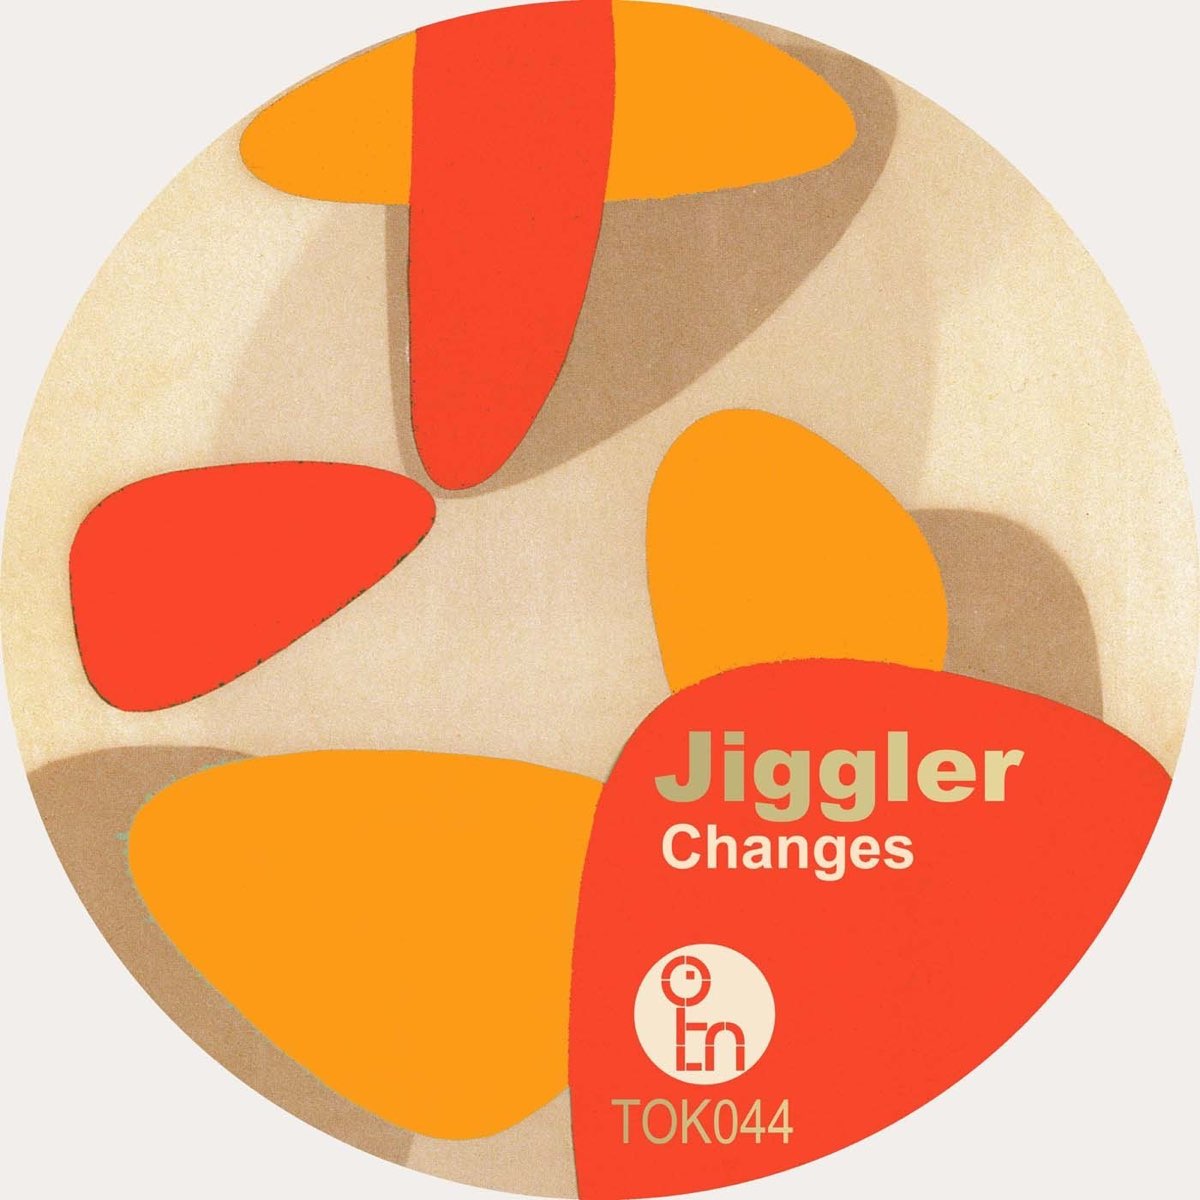 Jiggler. Jiggler - Venom (Original Mix). Single Sided Jiggler. Changes mixed